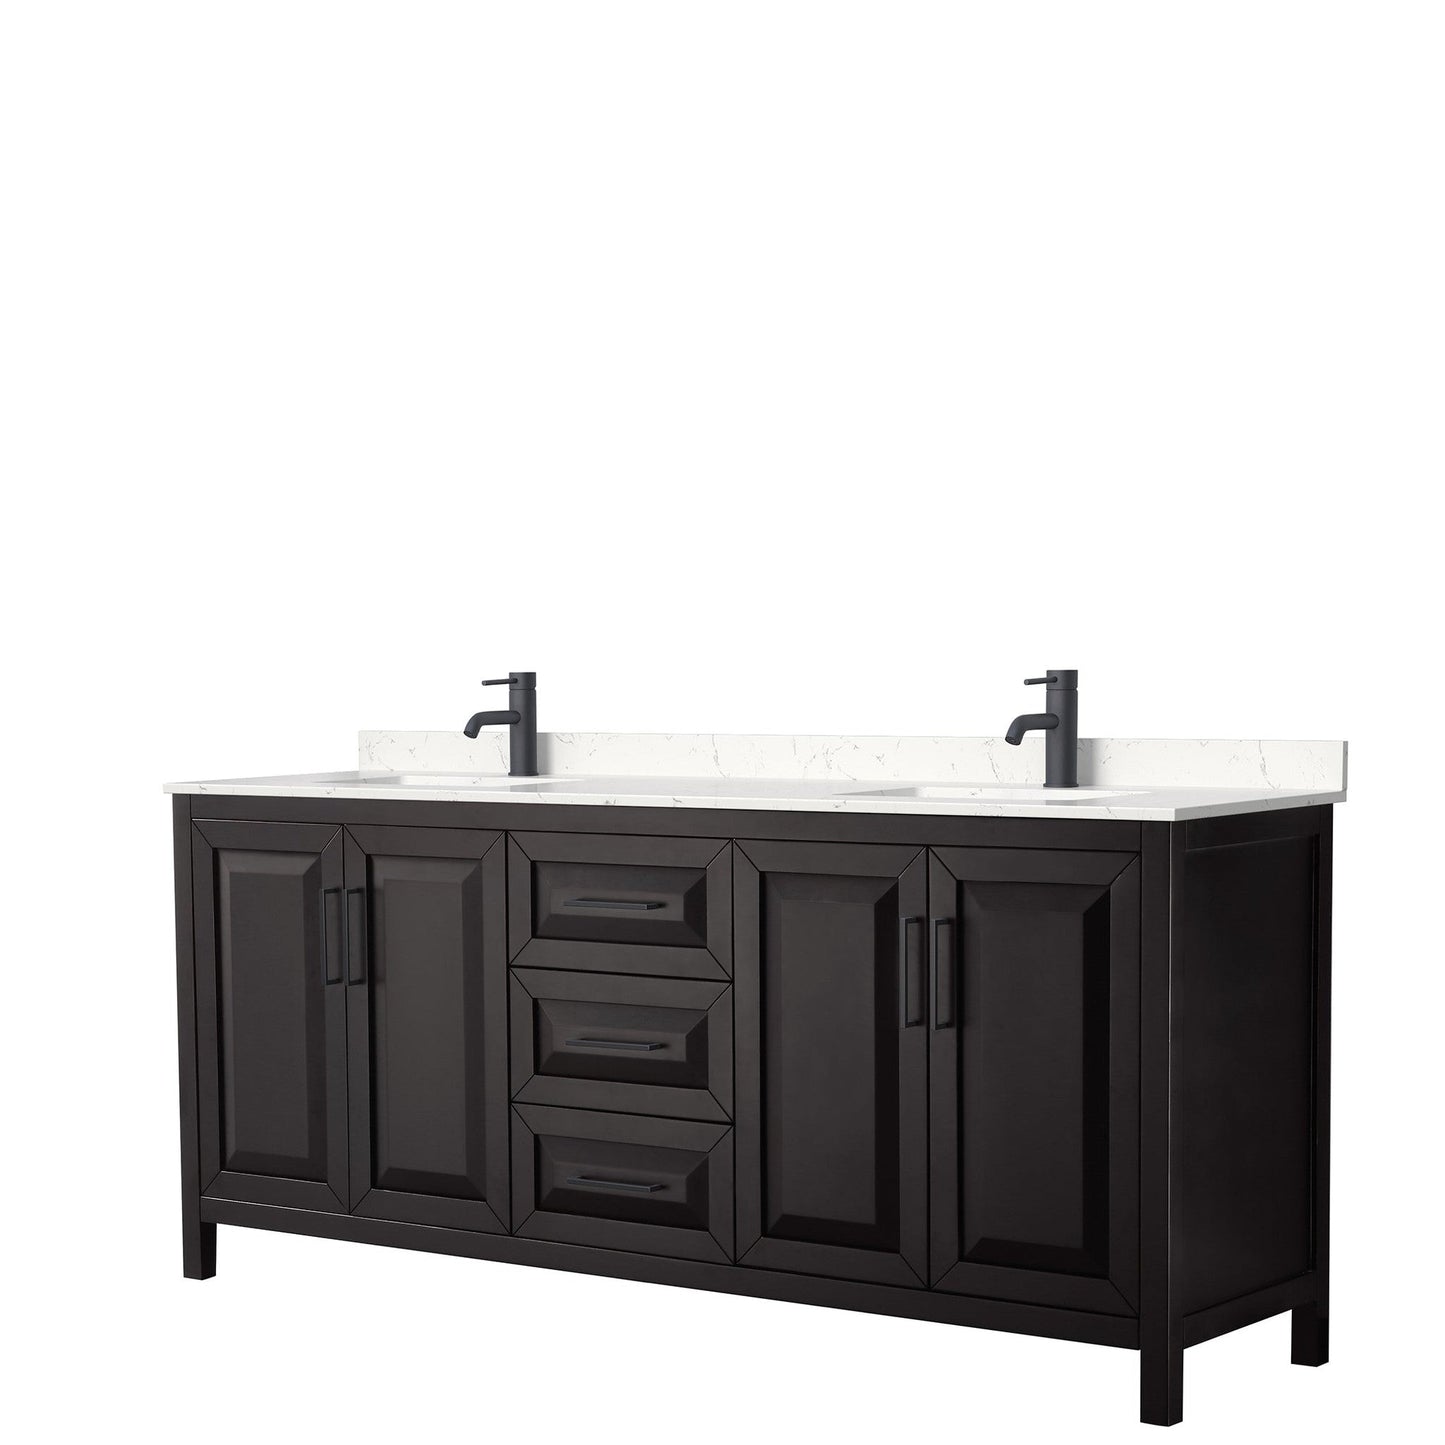 Daria 80" Double Bathroom Vanity in Dark Espresso, Carrara Cultured Marble Countertop, Undermount Square Sinks, Matte Black Trim